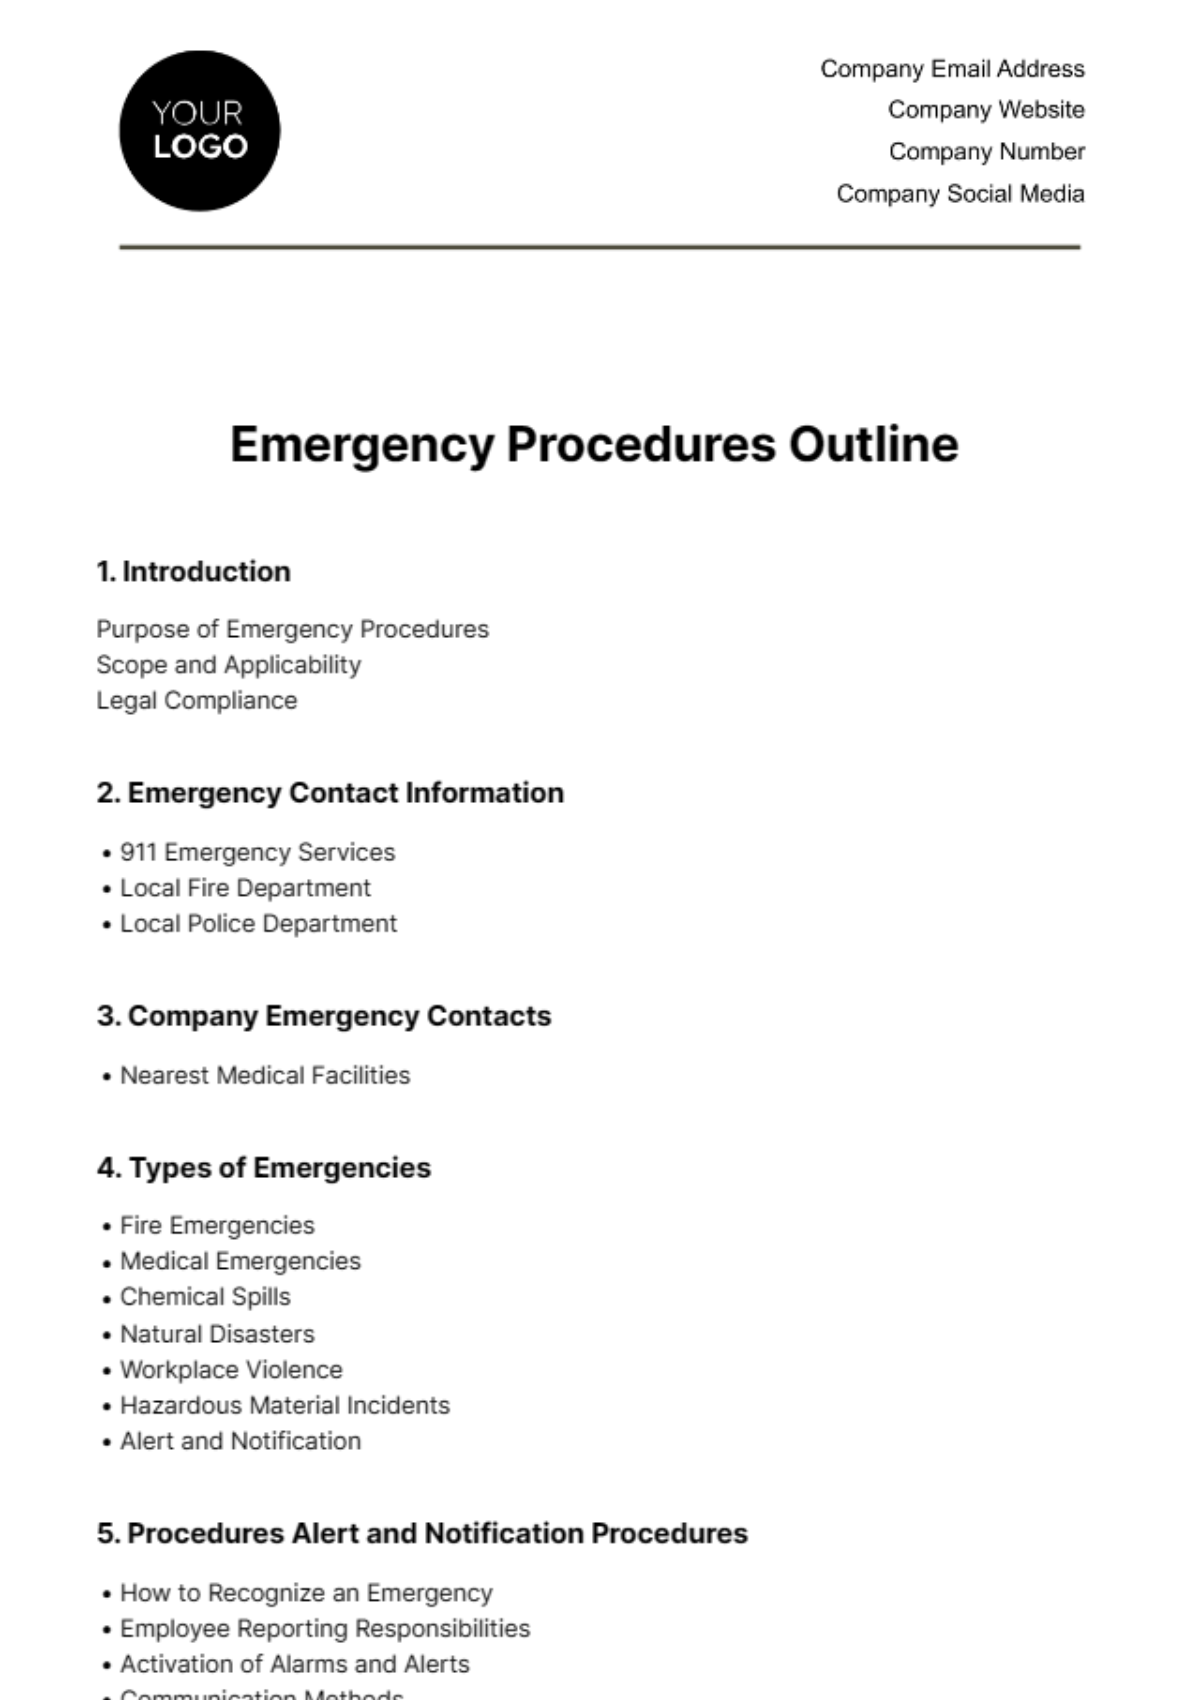 Emergency Procedures Outline Template